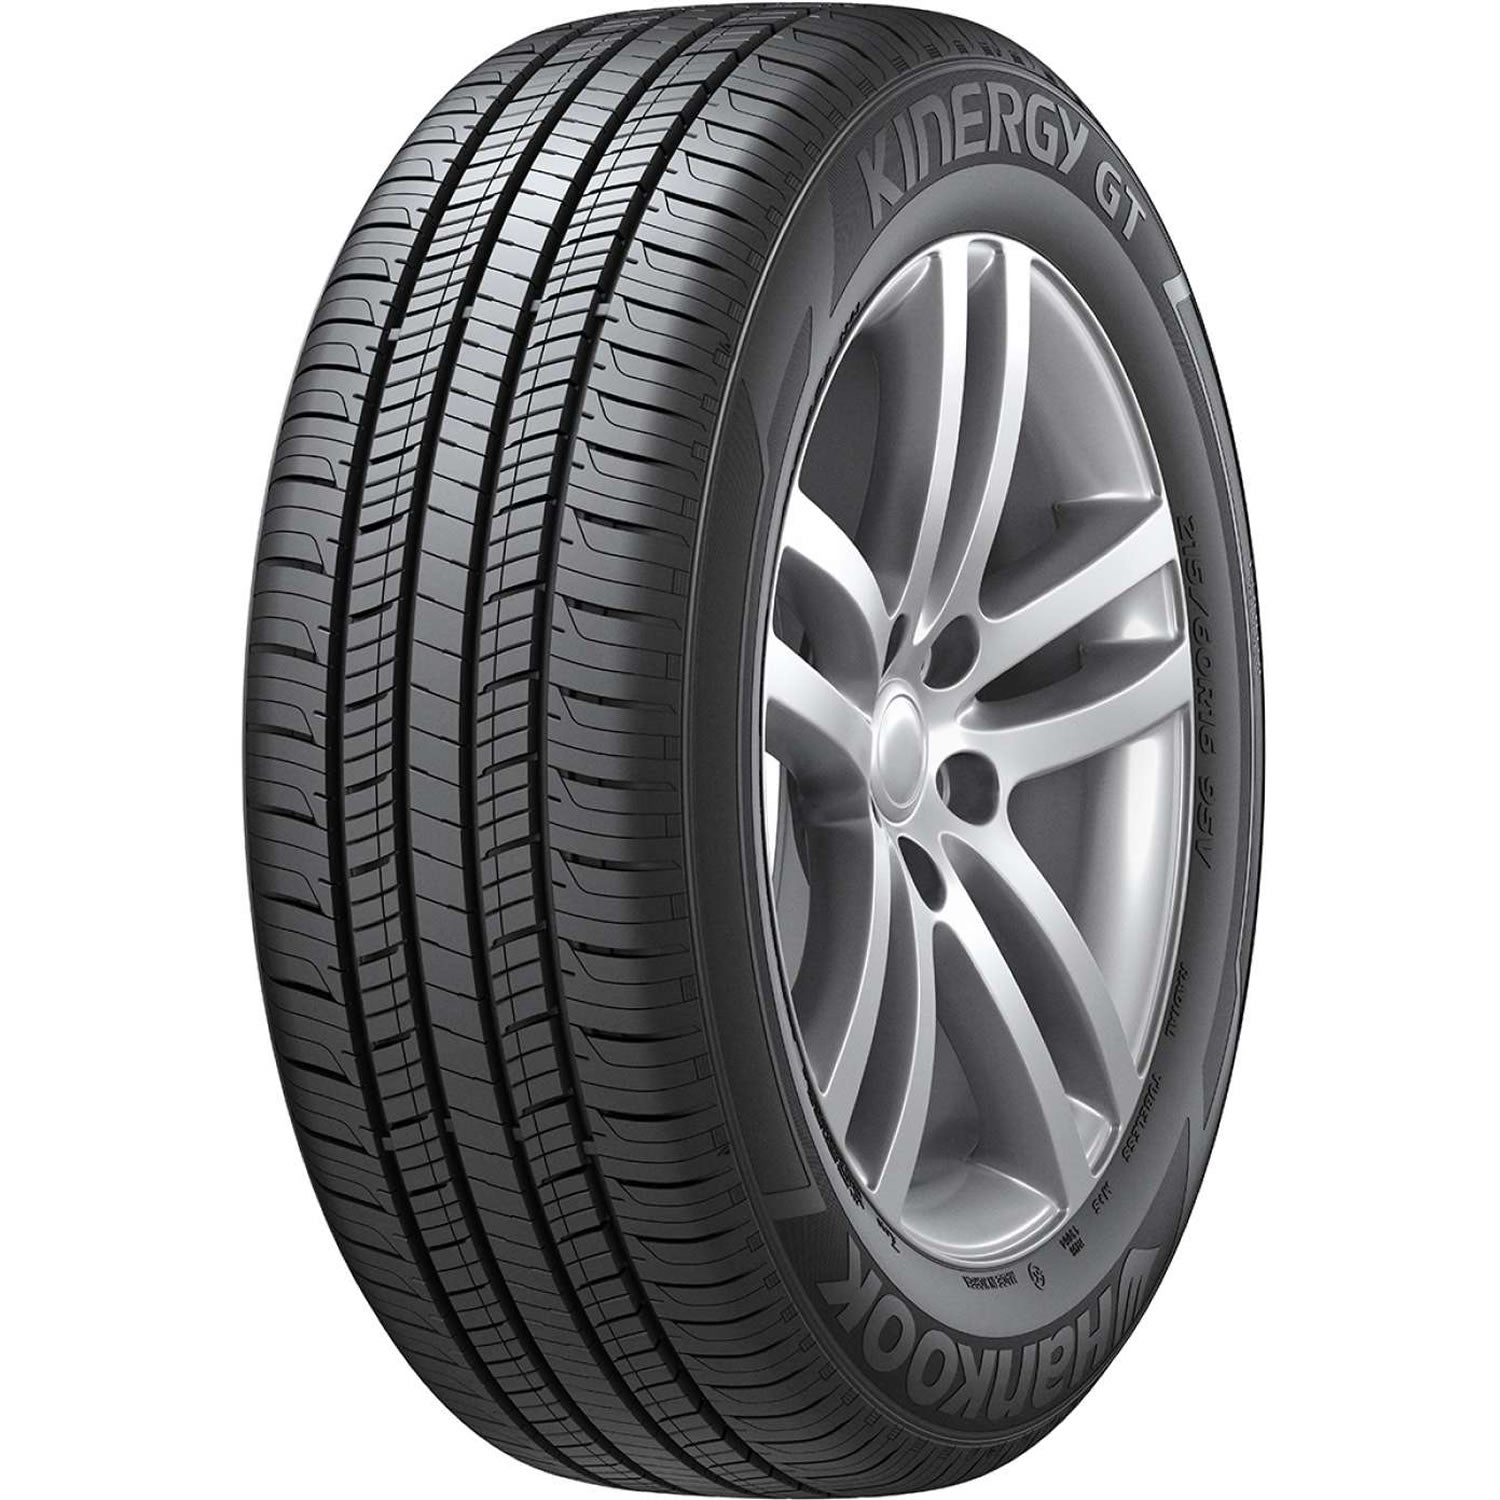 HANKOOK KINERGY GT 205/65R16 (26.2X8.1R 16) Tires